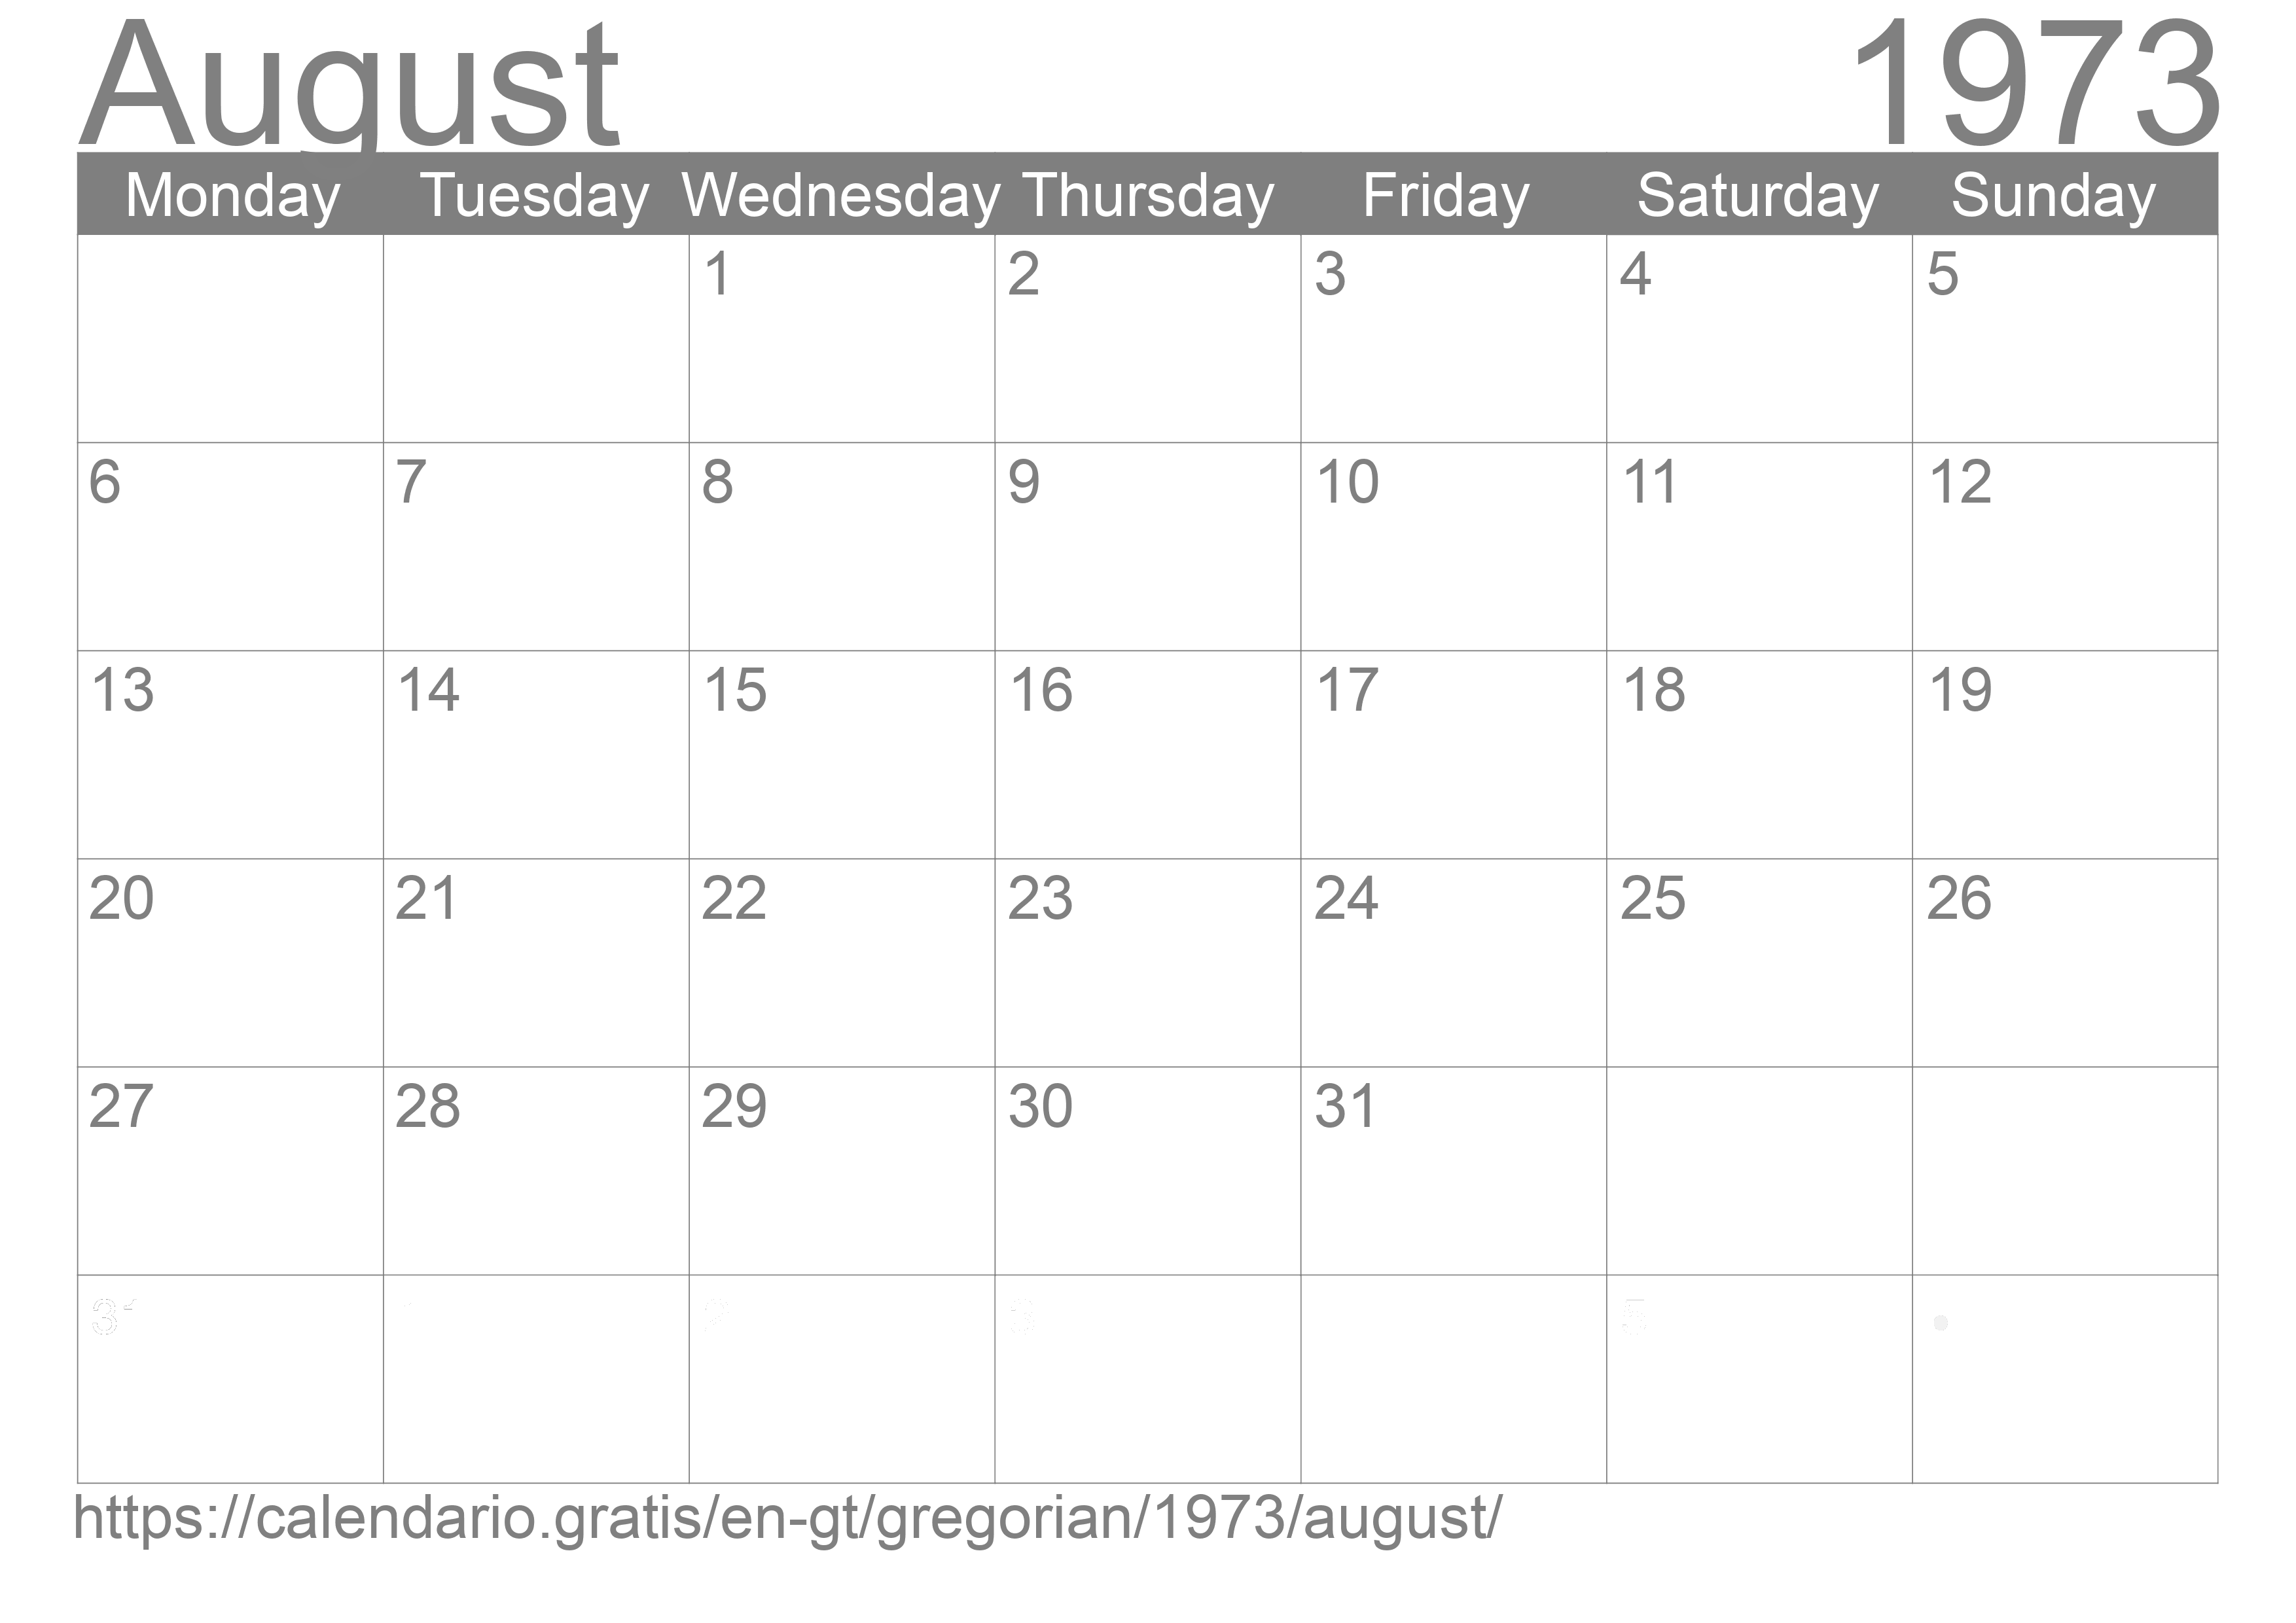 Calendar August 1973 to print